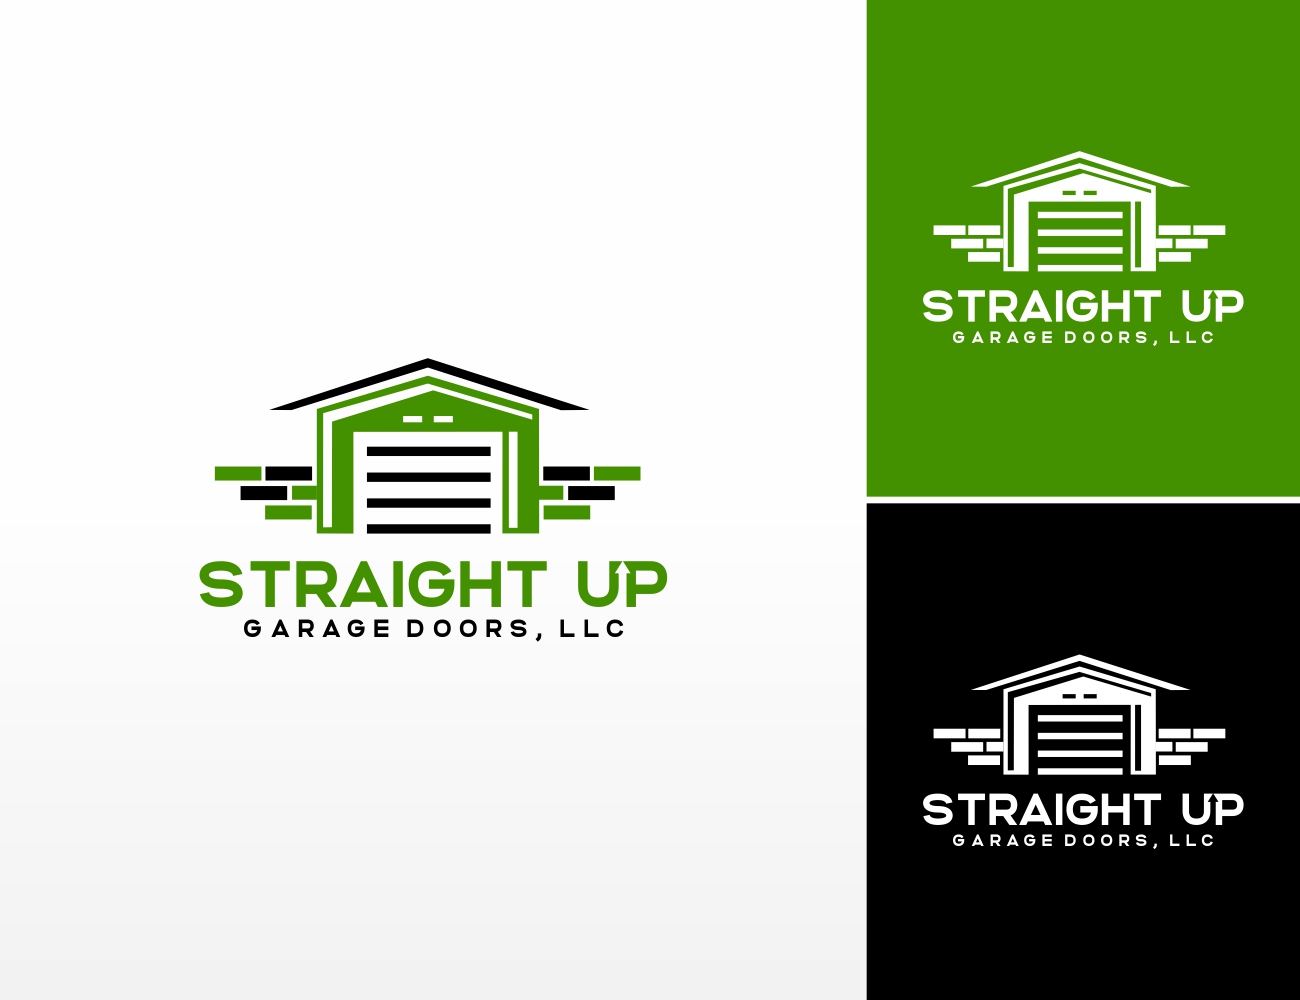 Logo Design Contest For Straight Up Garage Doors Llc Hatchwise